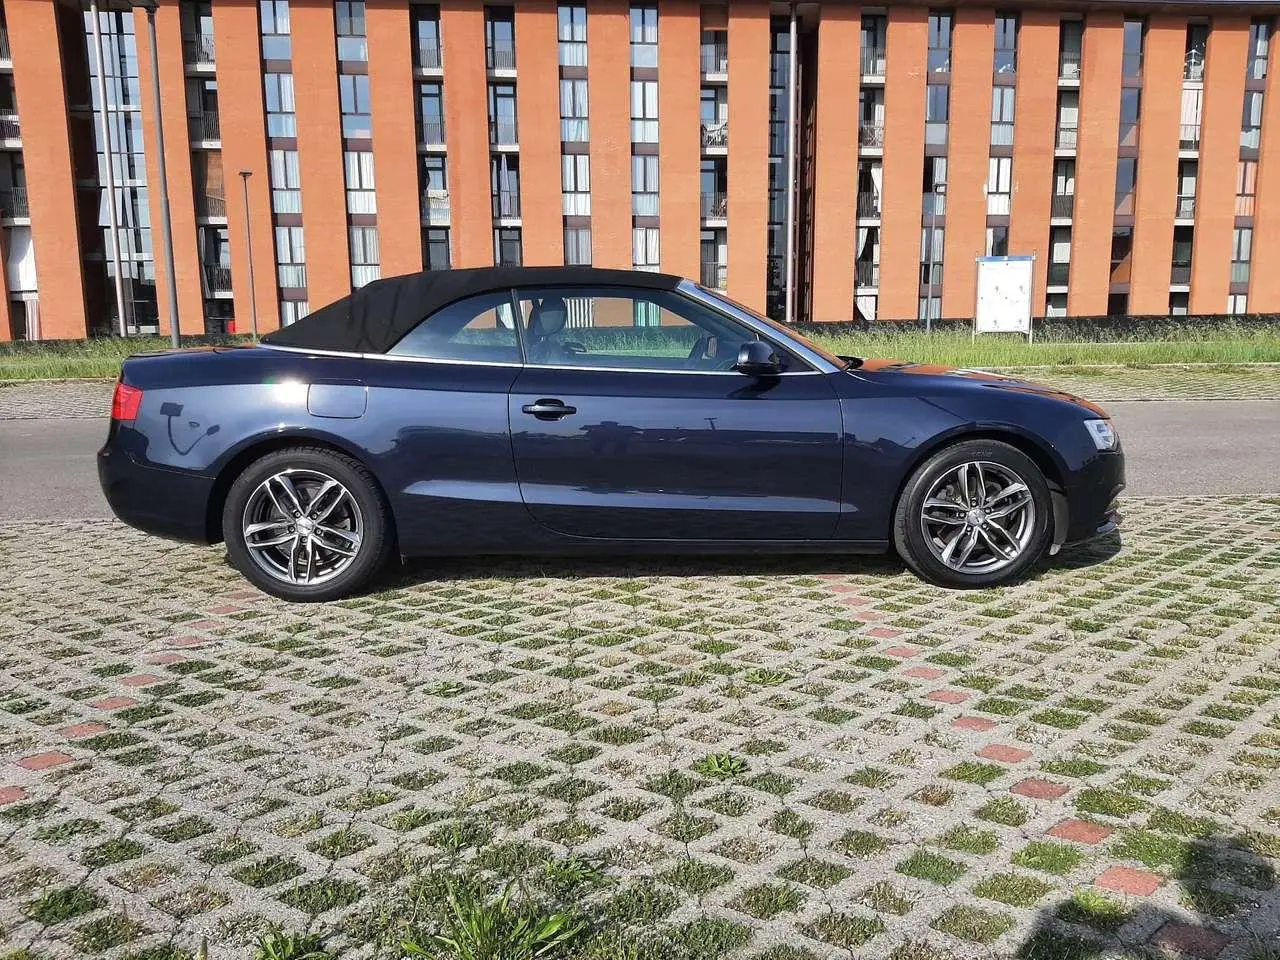 Photo 1 : Audi A5 2016 Diesel